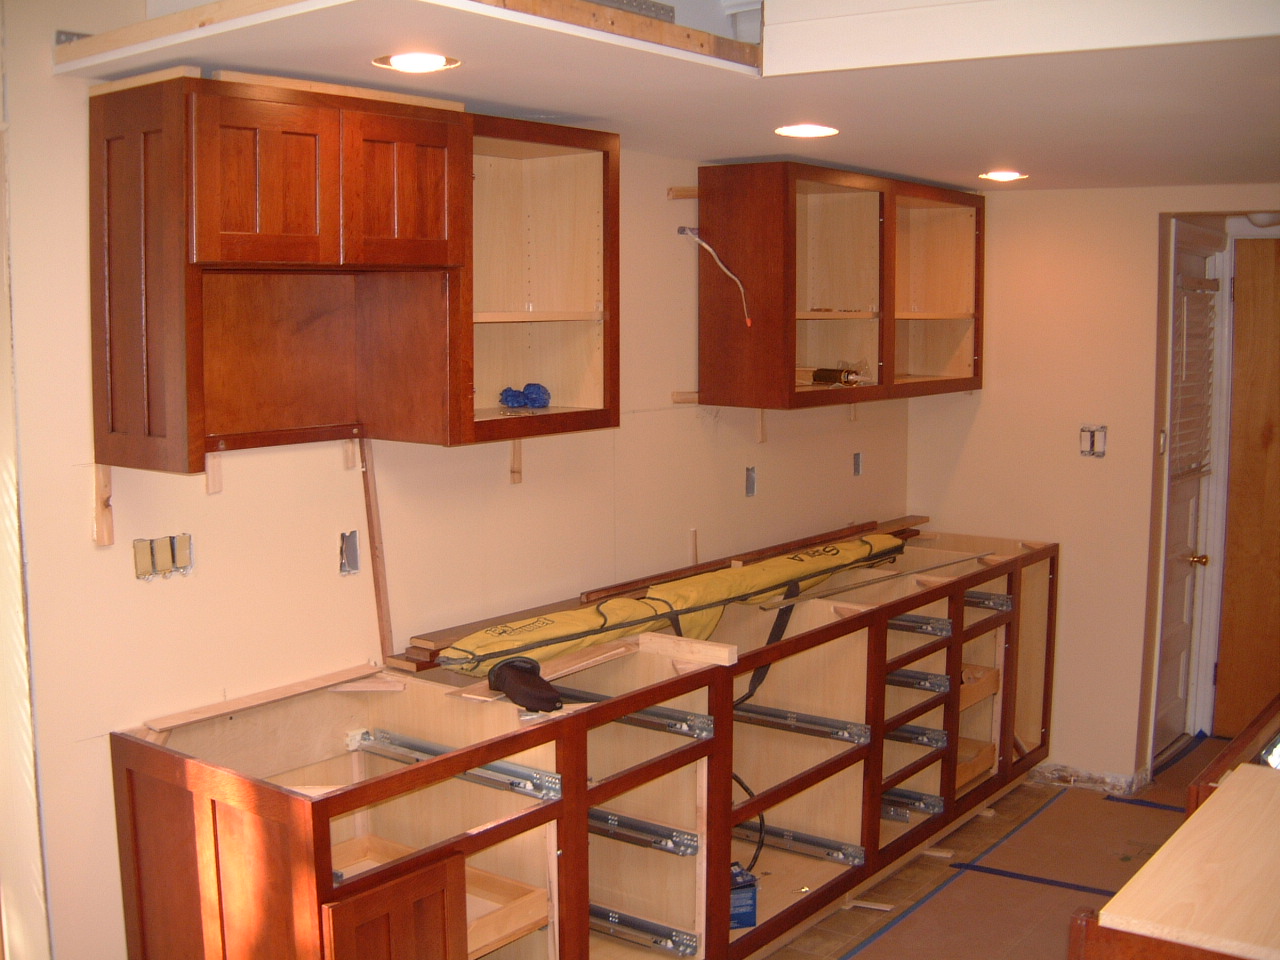 Installing kitchen cabinets